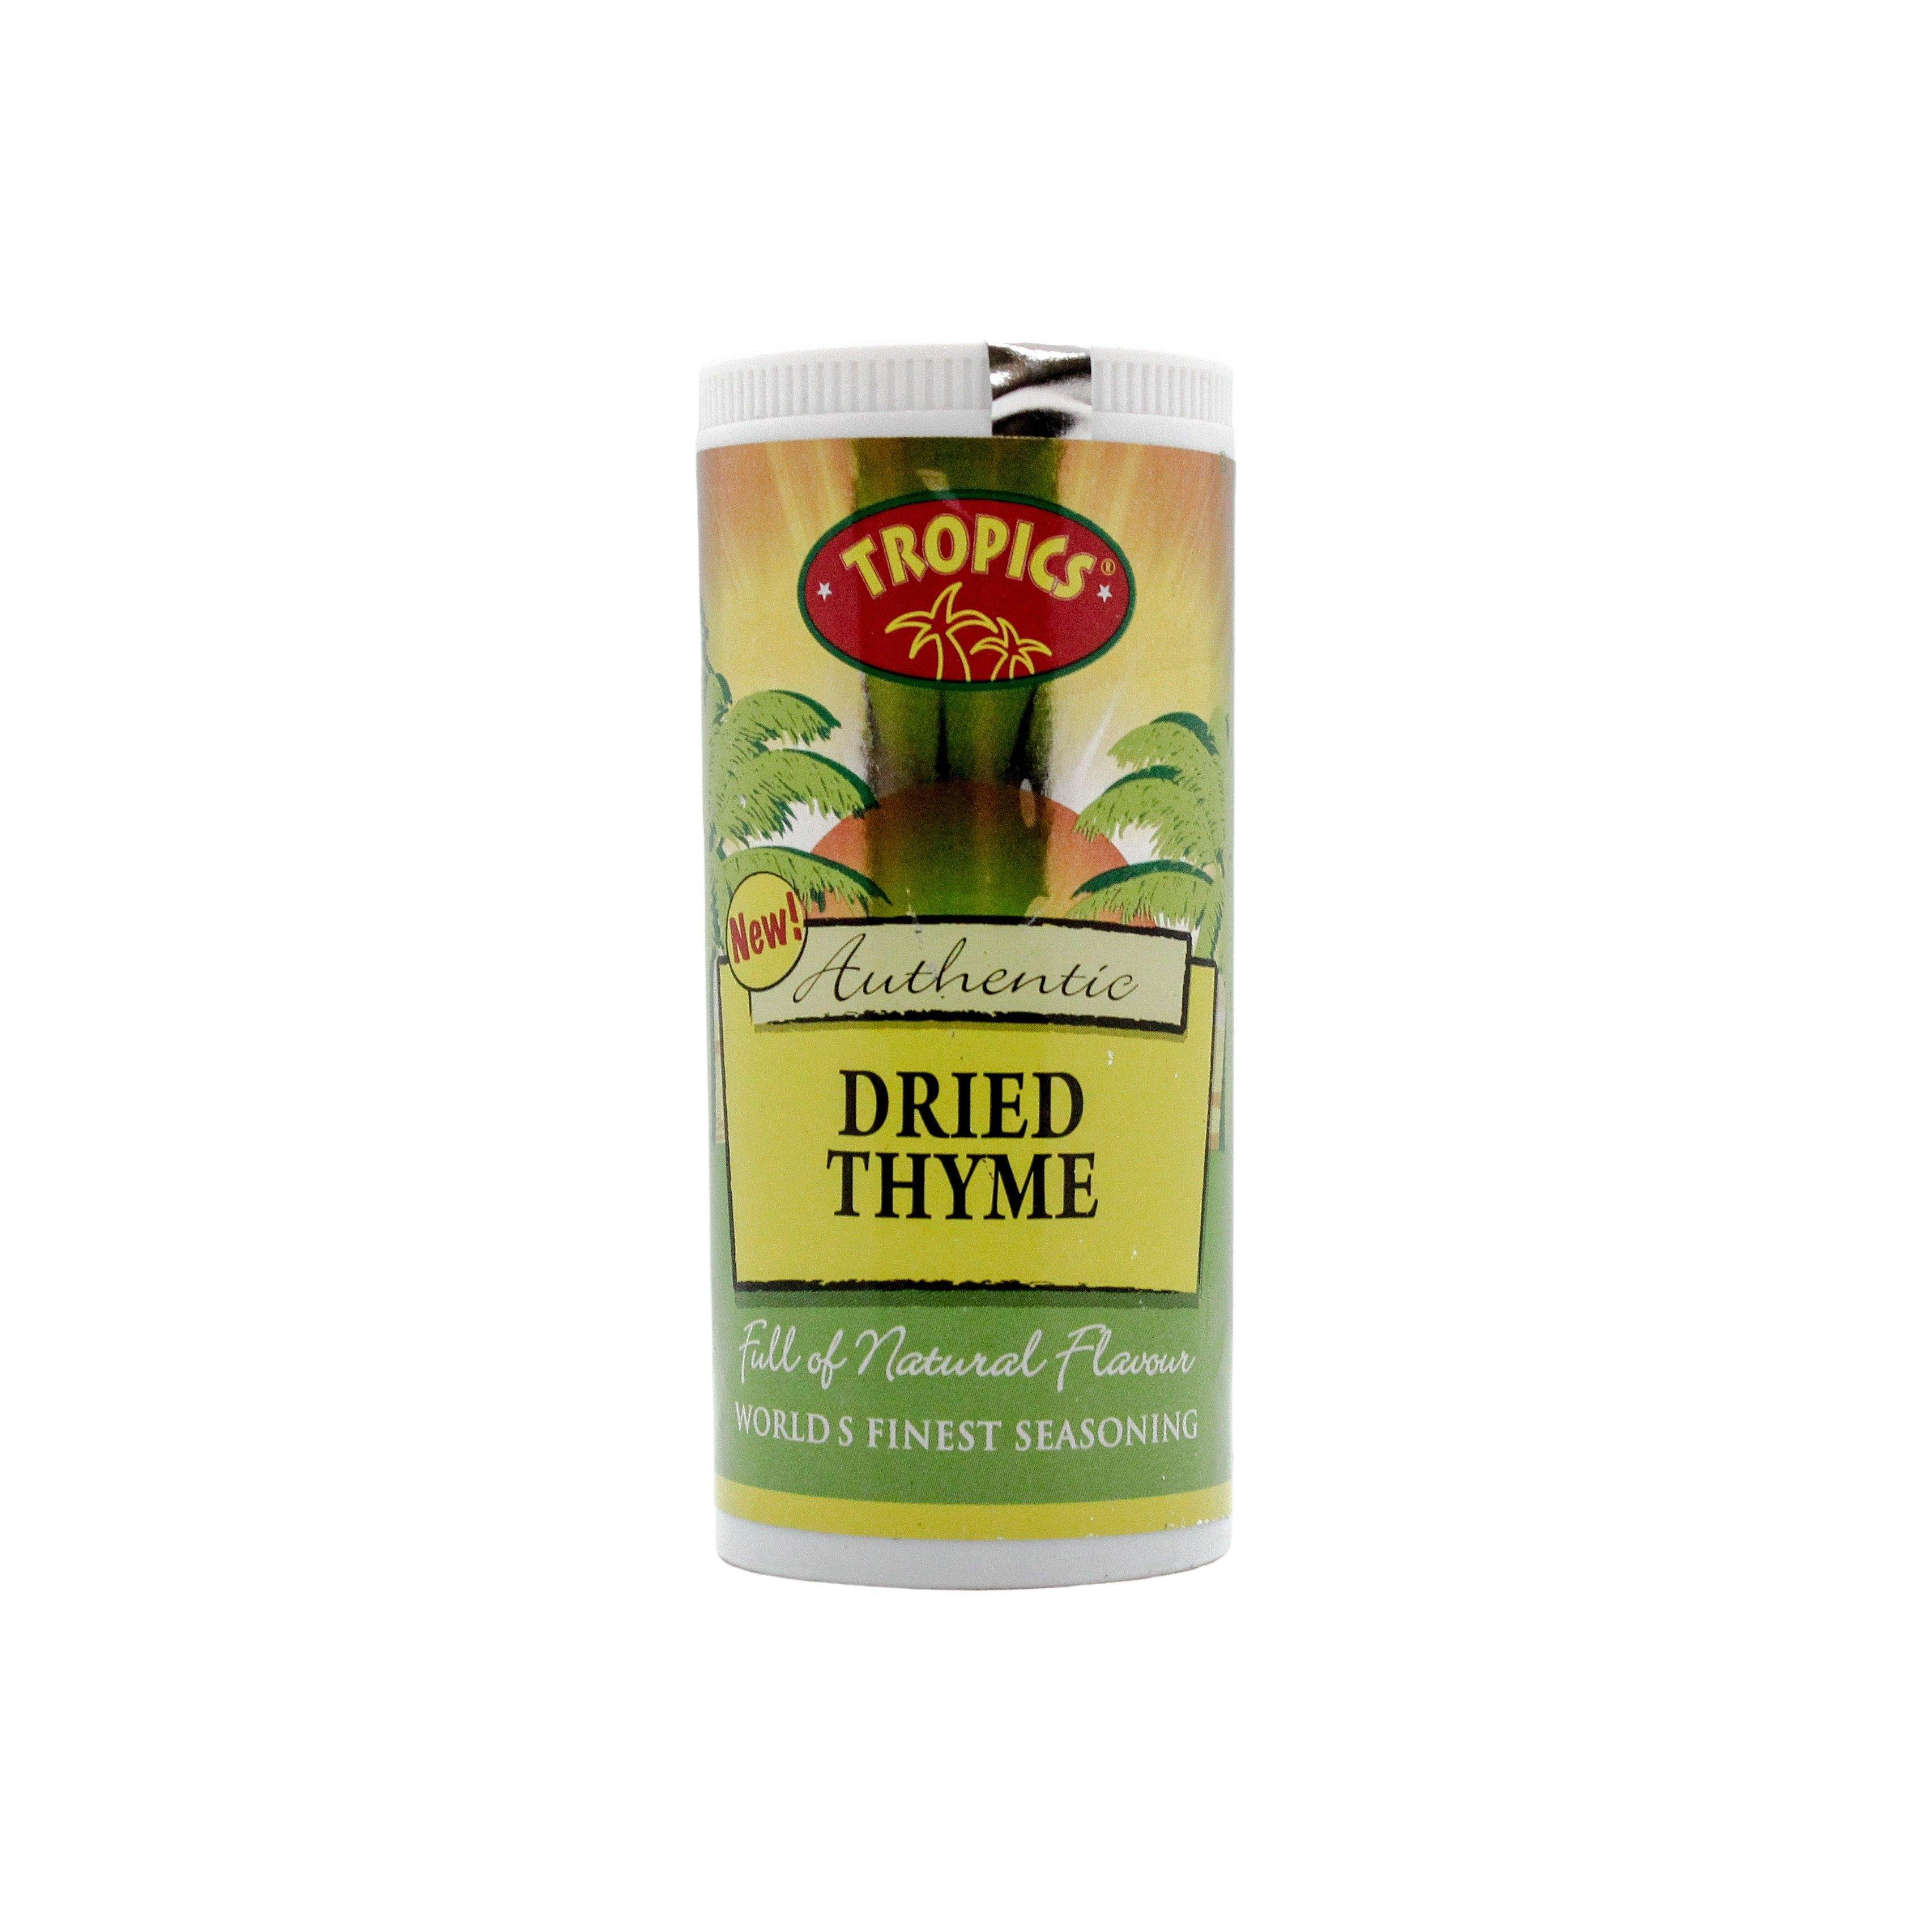 Tropics dried thyme seasoning SaveCo Online Ltd